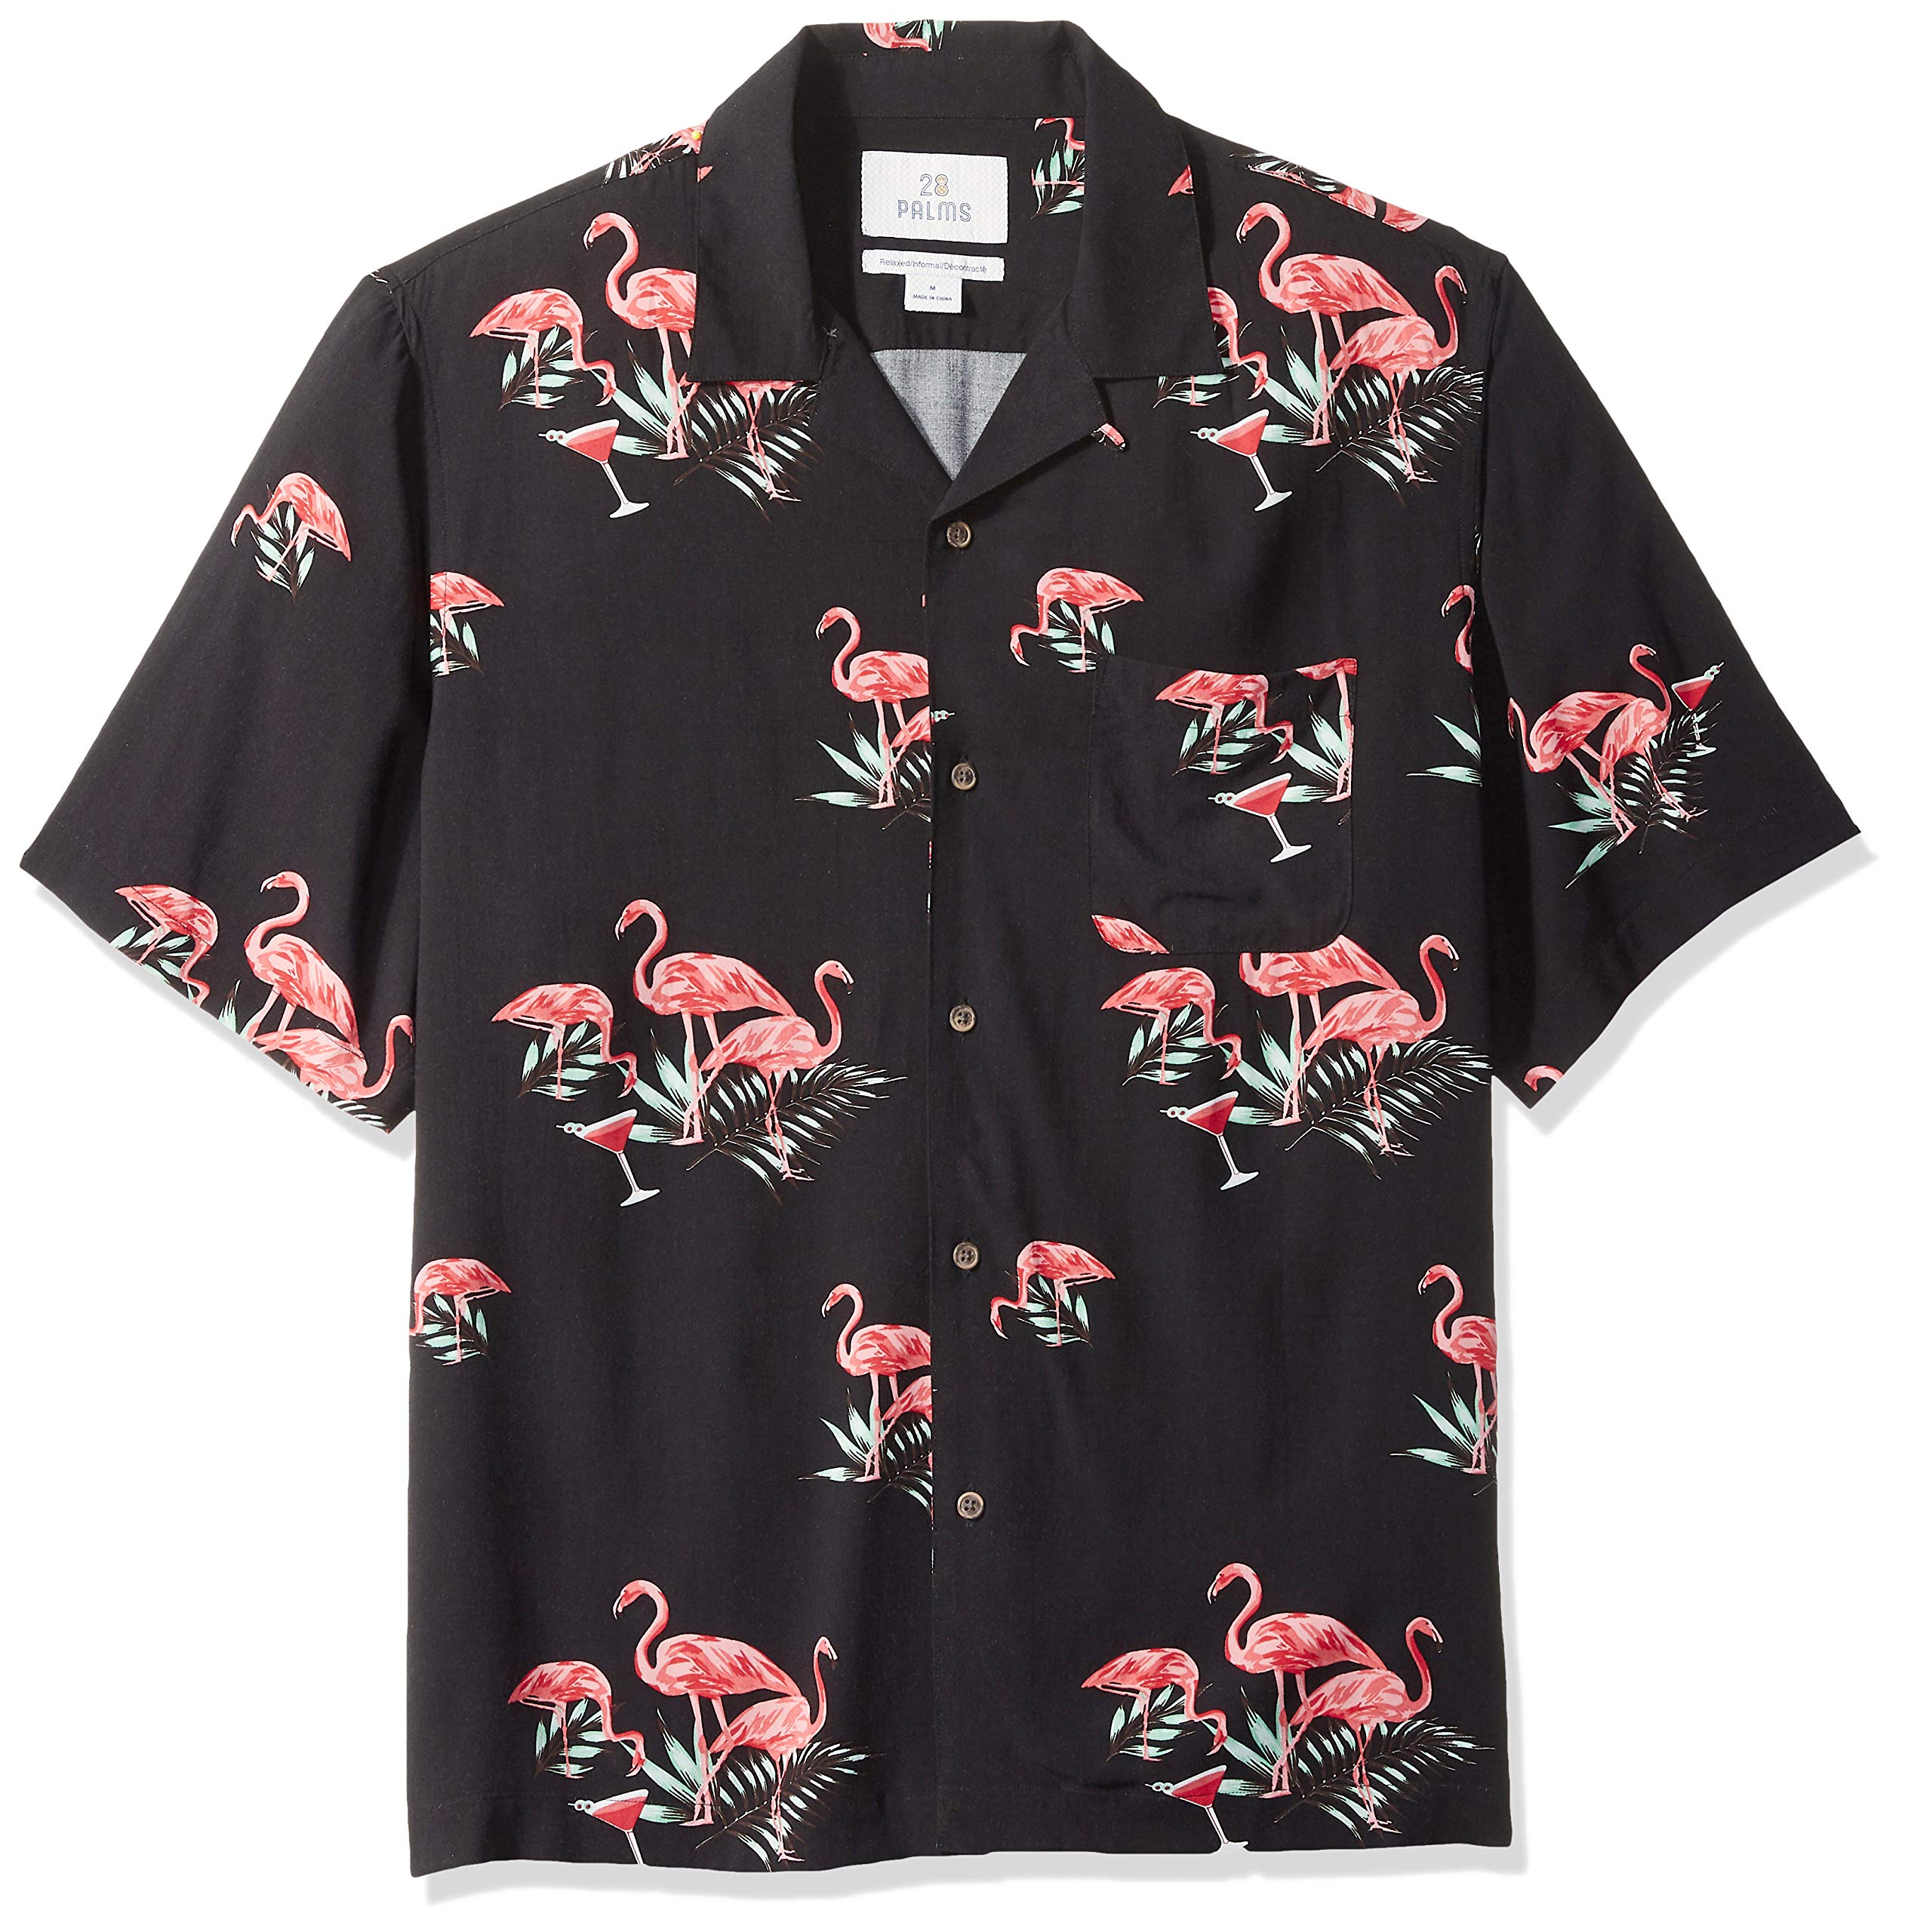 28 Palms + Black Flamingo Hawaiian Shirt